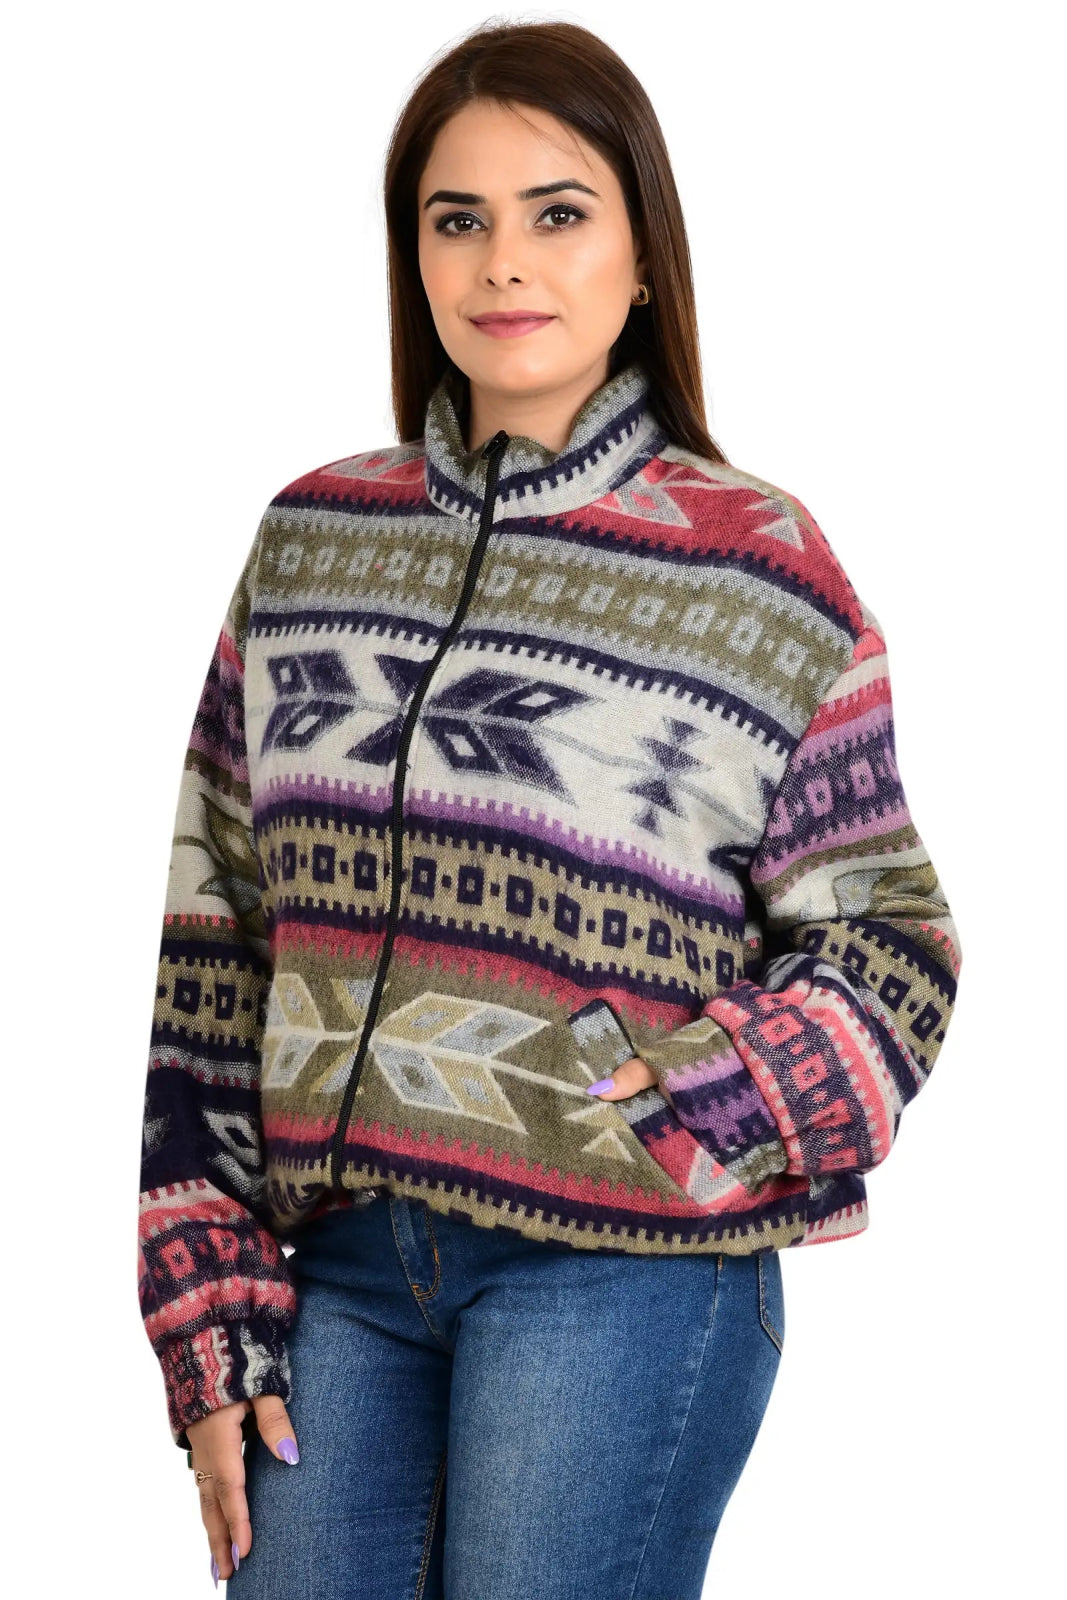 Yak Wool Blend Zipper Jacket Kimono | Autumn Winter Warm Cozy Diamond Aztec Geometric Soft comfy Bomber Bolero Style Sweater | With Pockets - The Eastern Loom